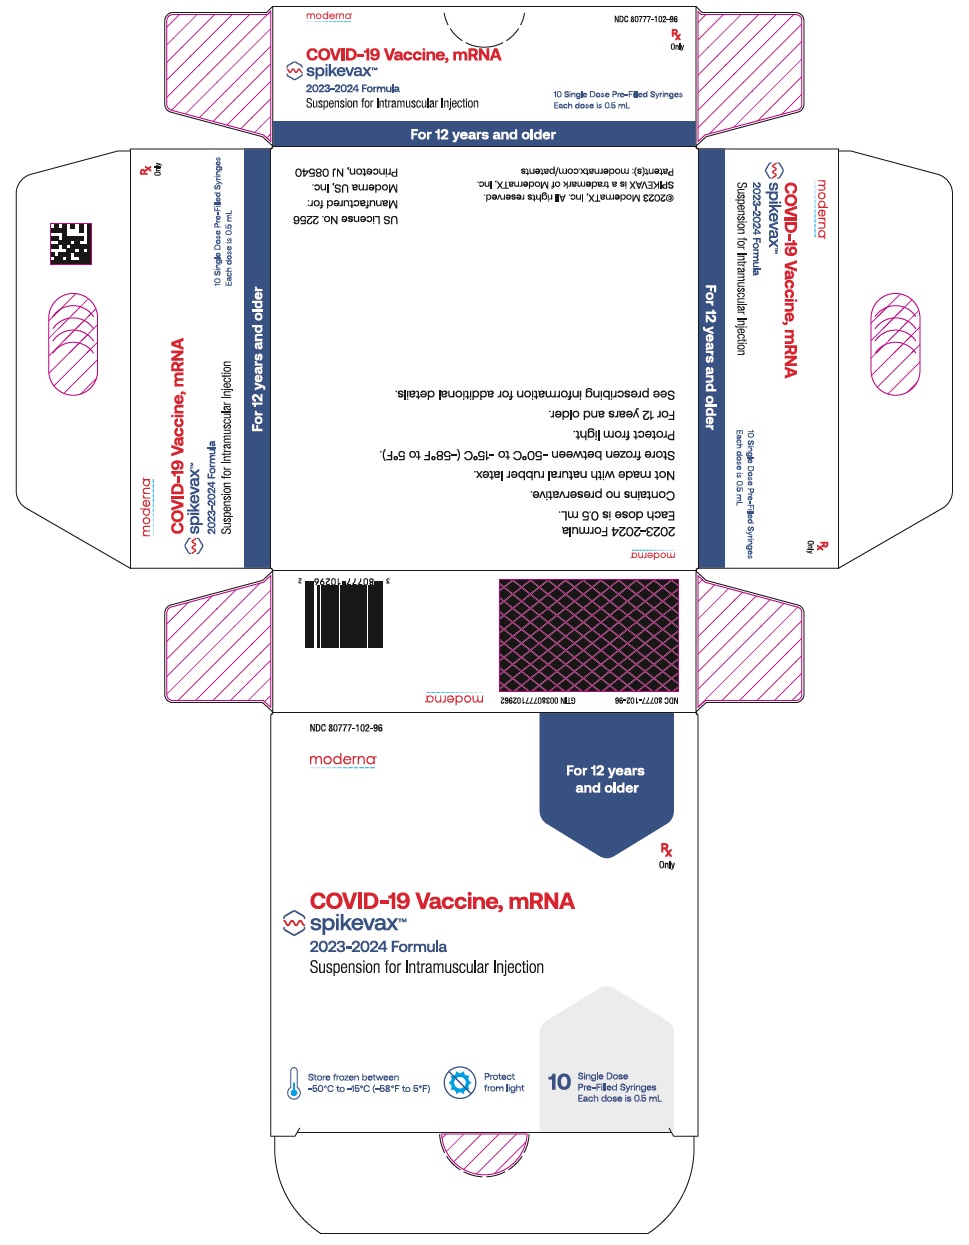 Spikevax (COVID-19 Vaccine, mRNA) 2023-2024 Formula Suspension for Intramuscular Injection Single Dose Pre-Filled Syringe Carton 0.5 mL (80777-102-96)